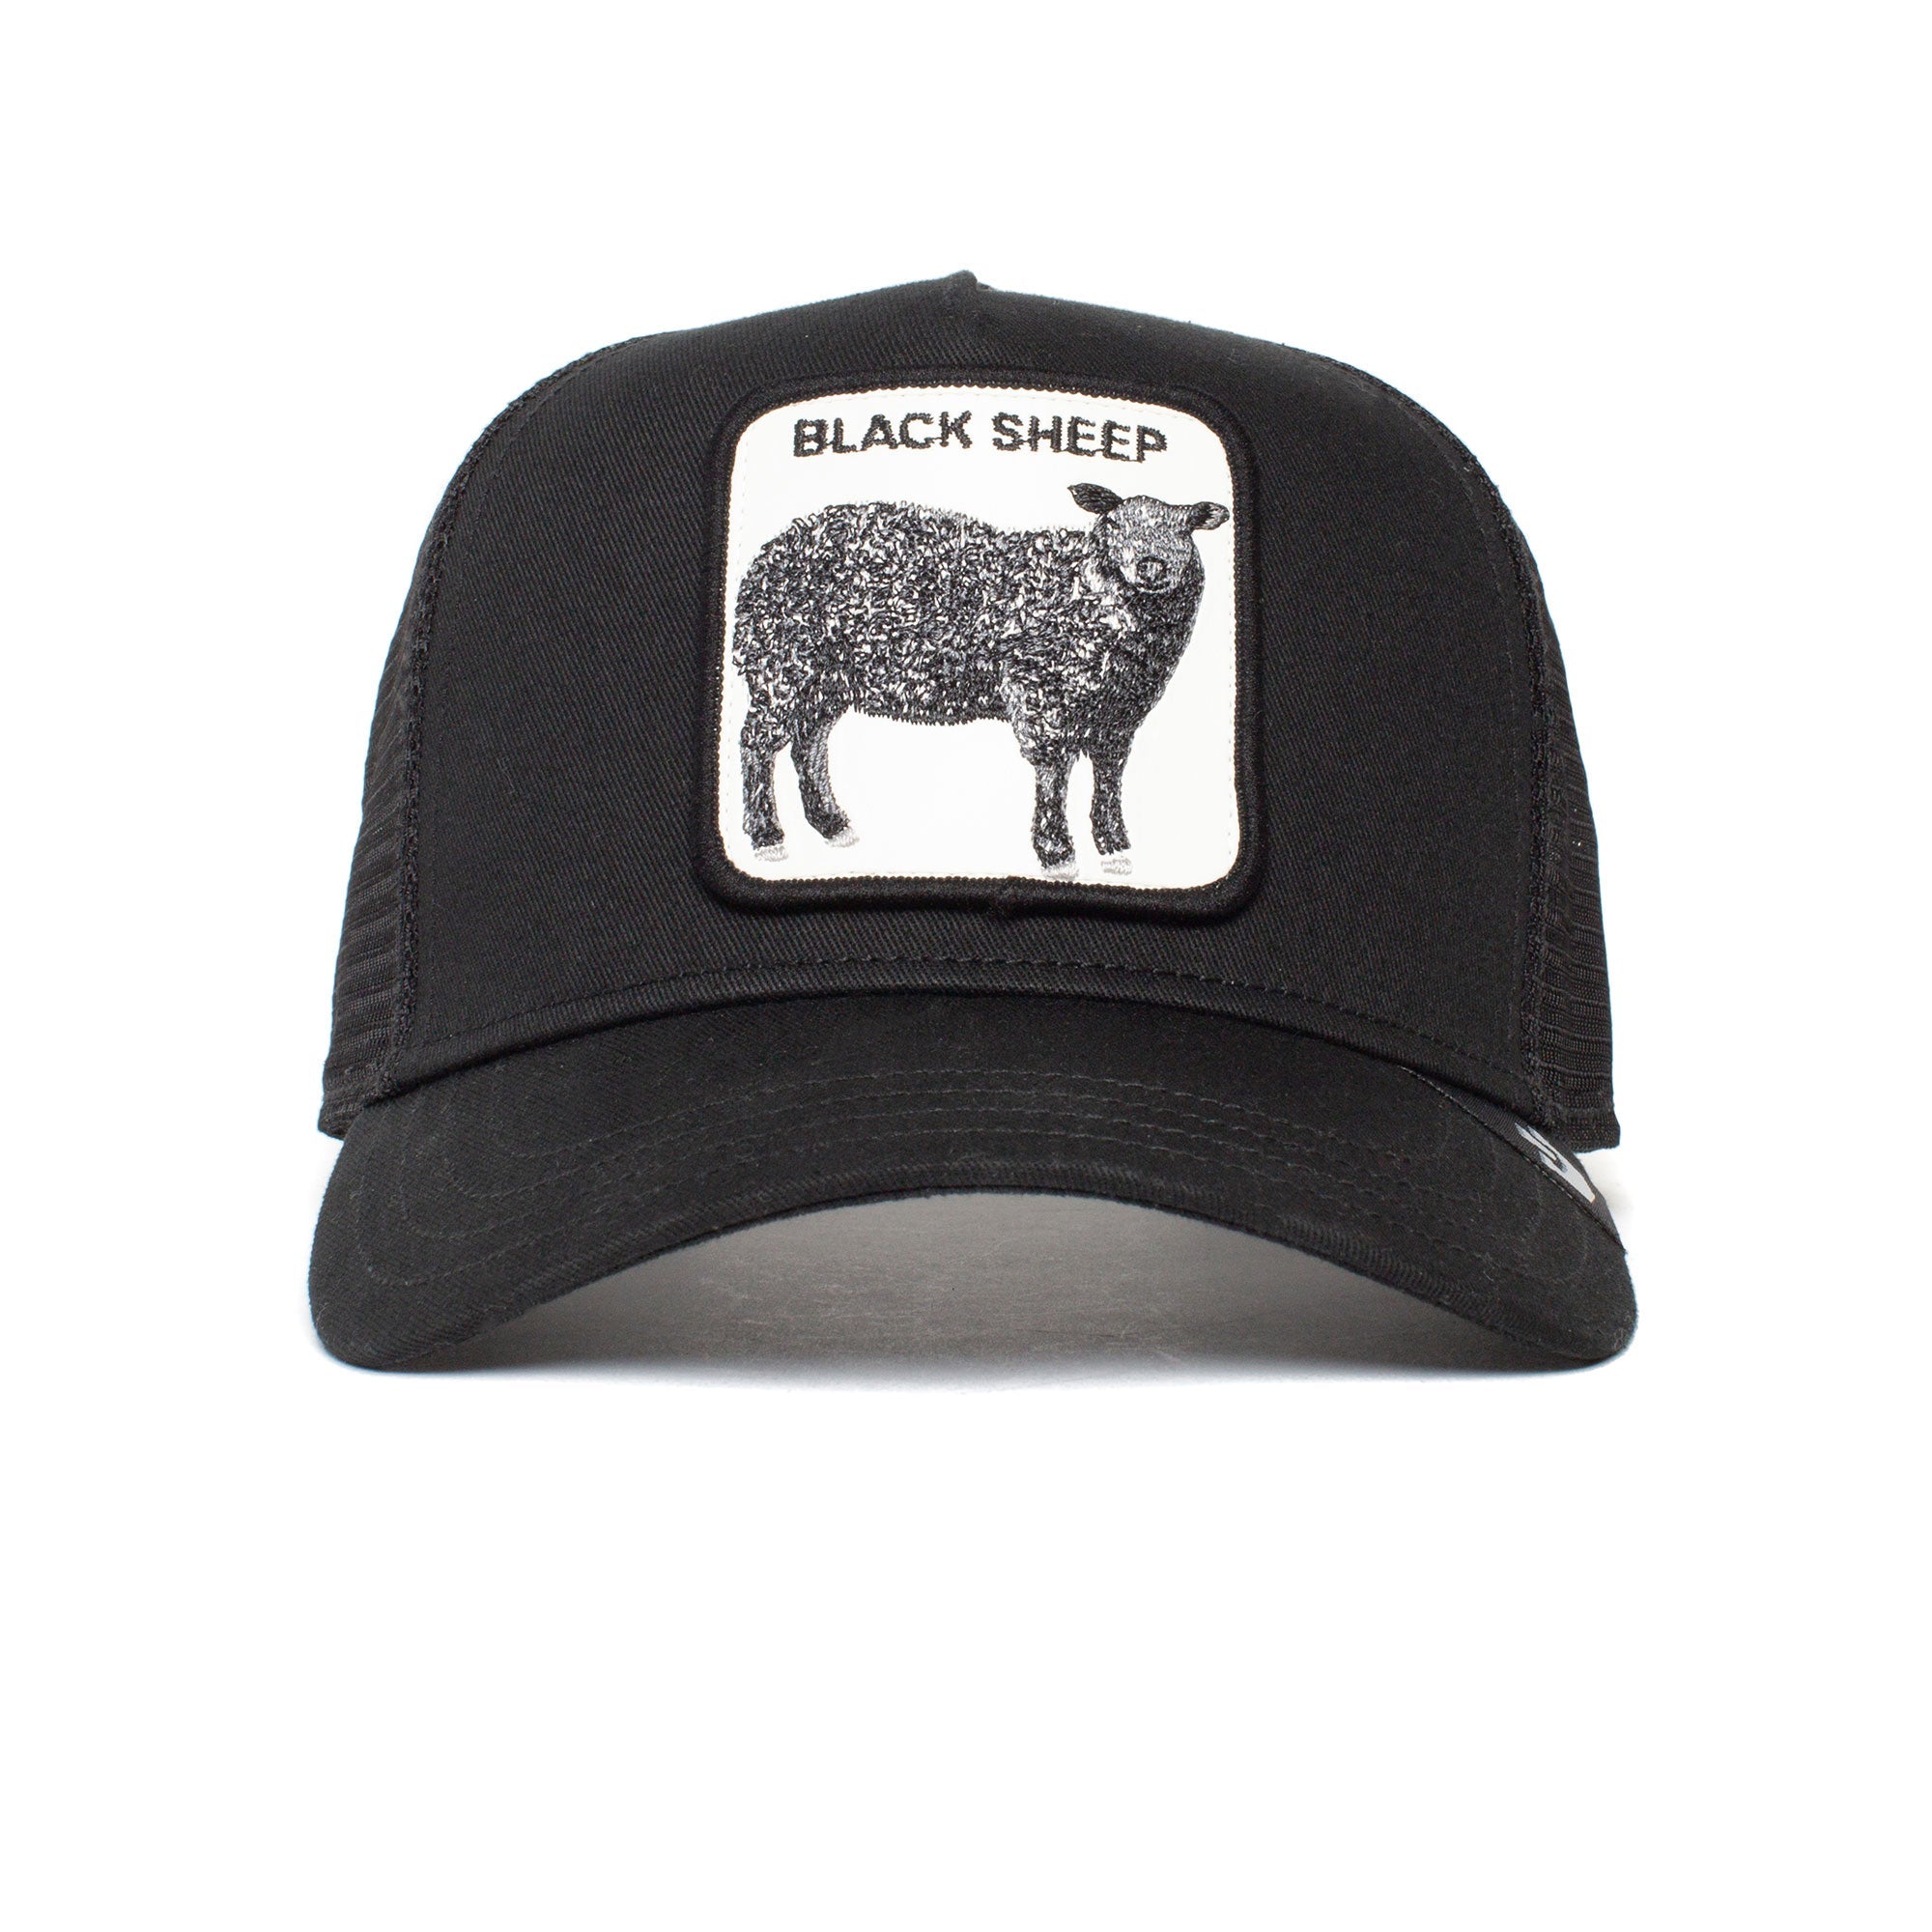 Goorin Bros - The Black Sheep Trucker Cap - Black